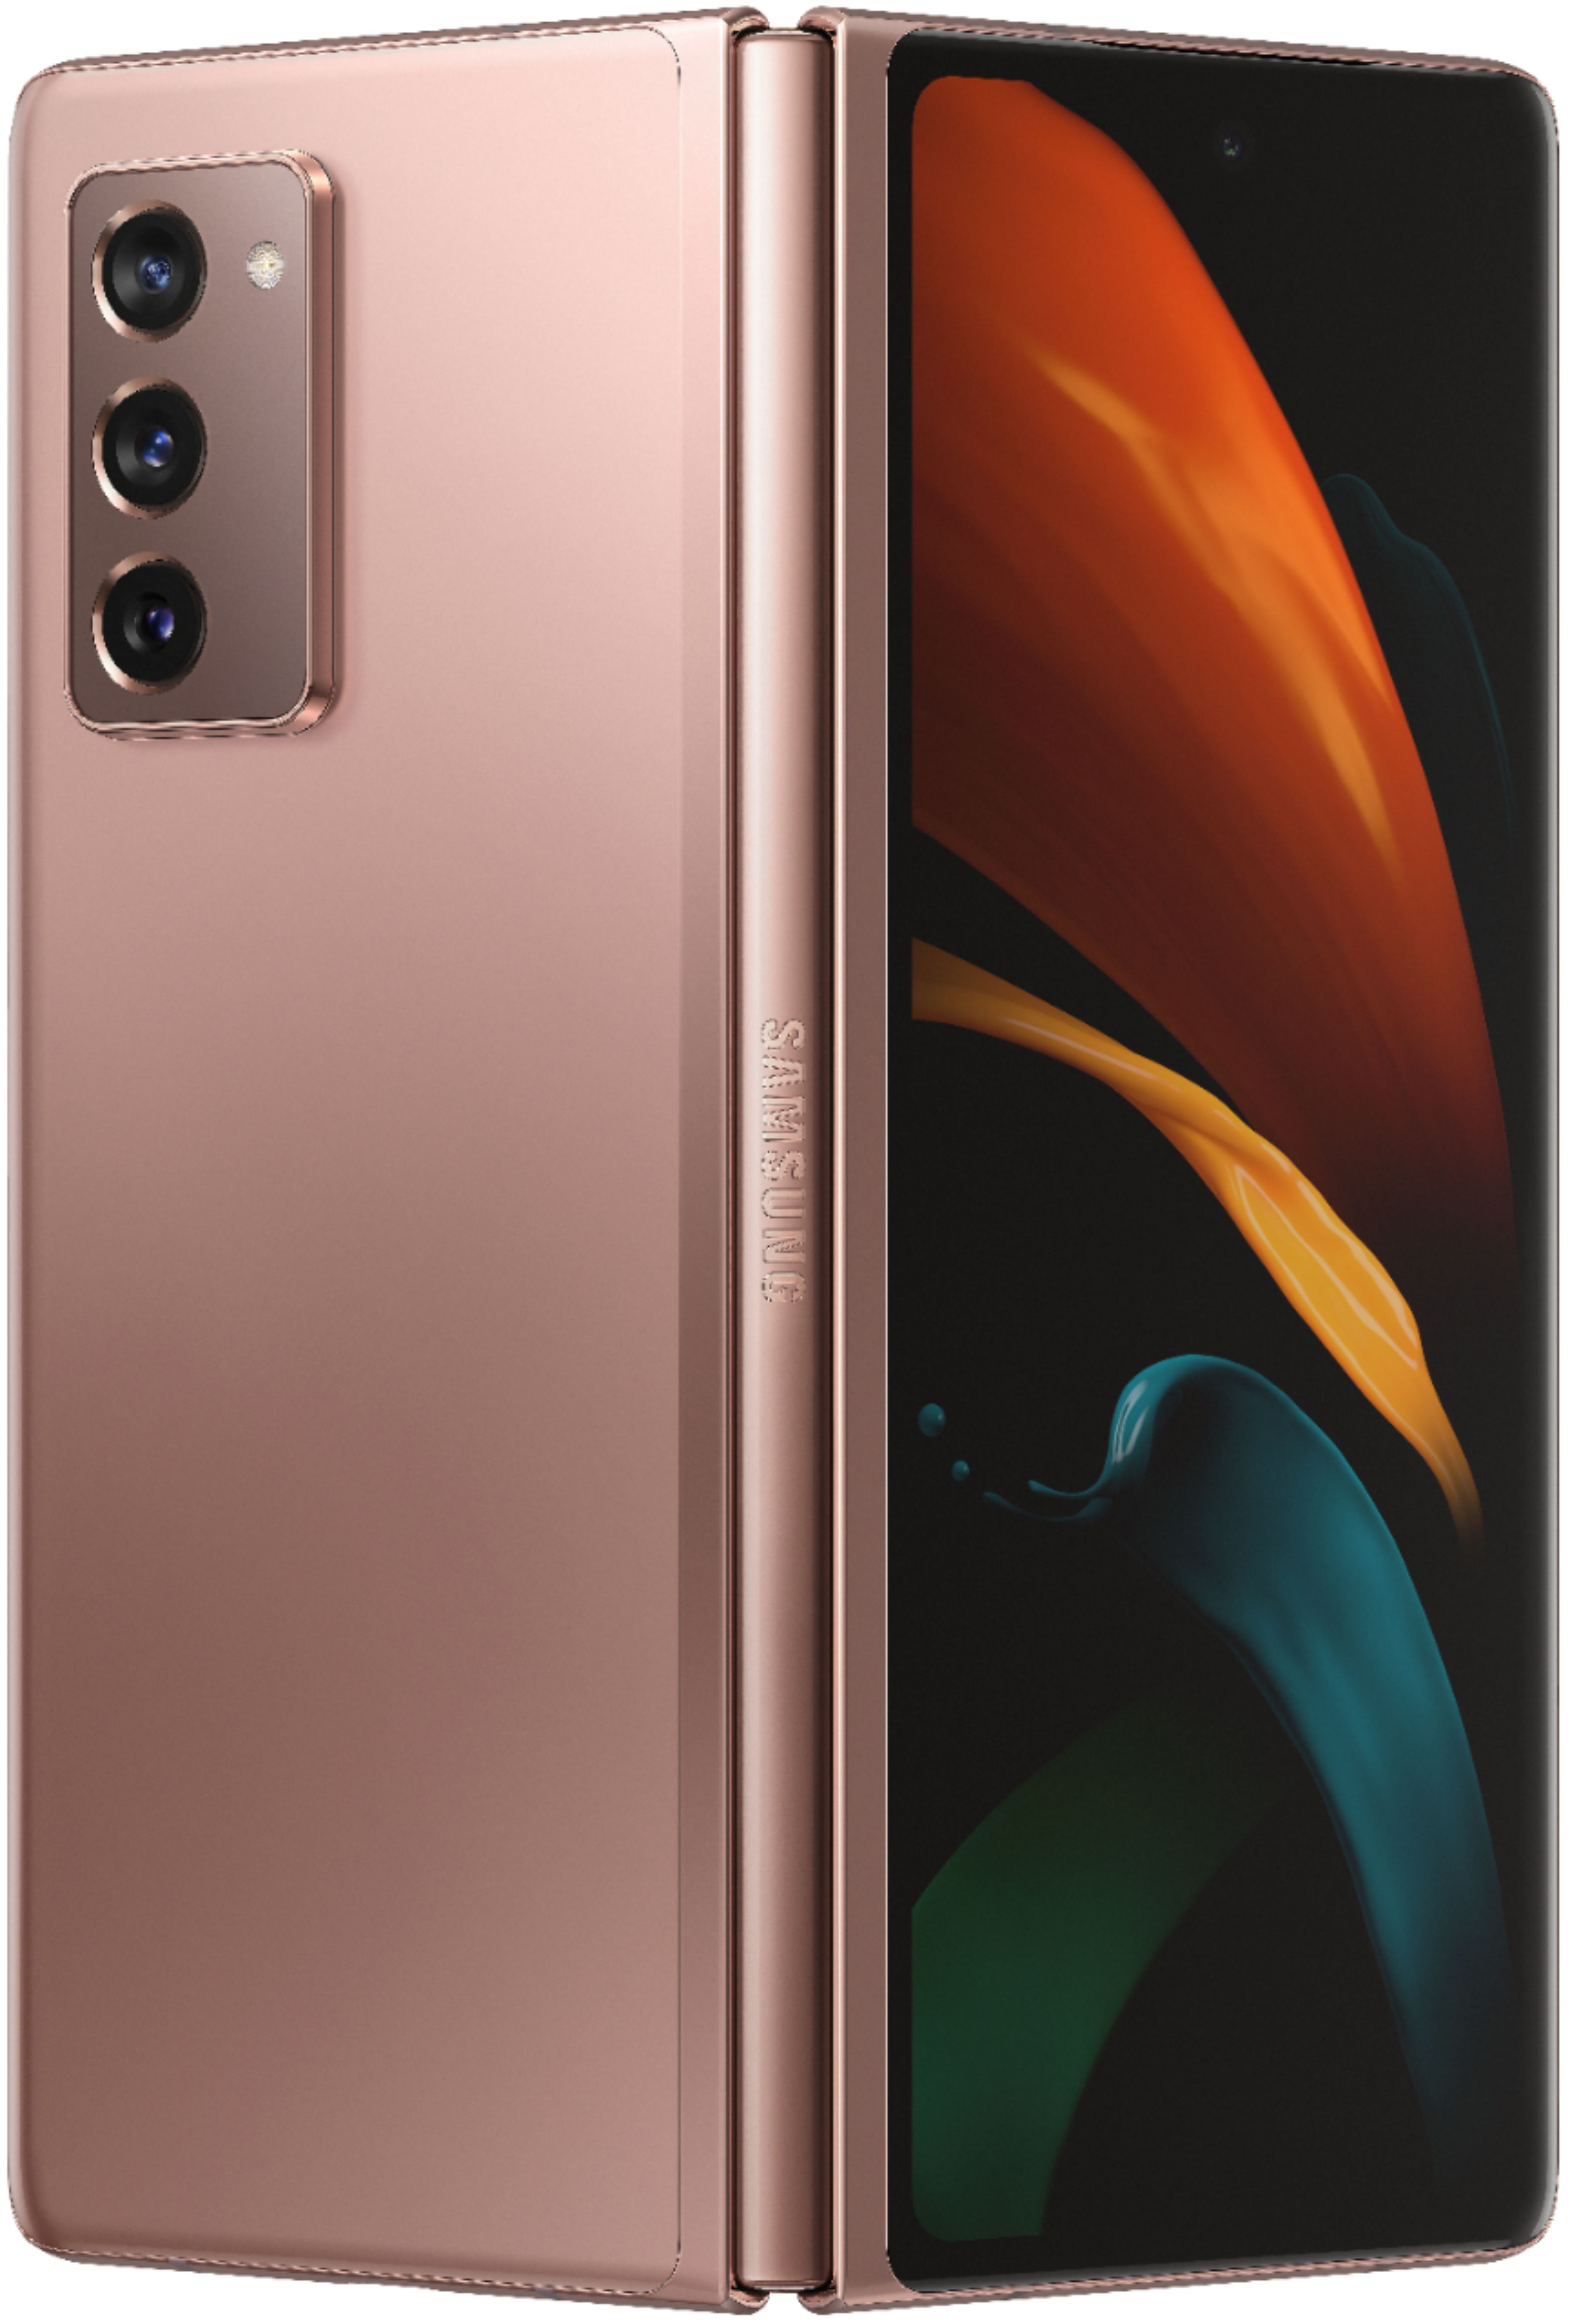 Samsung Galaxy Z Fold2 5g Mystic Bronze 256gb new Zealand, SAVE 45